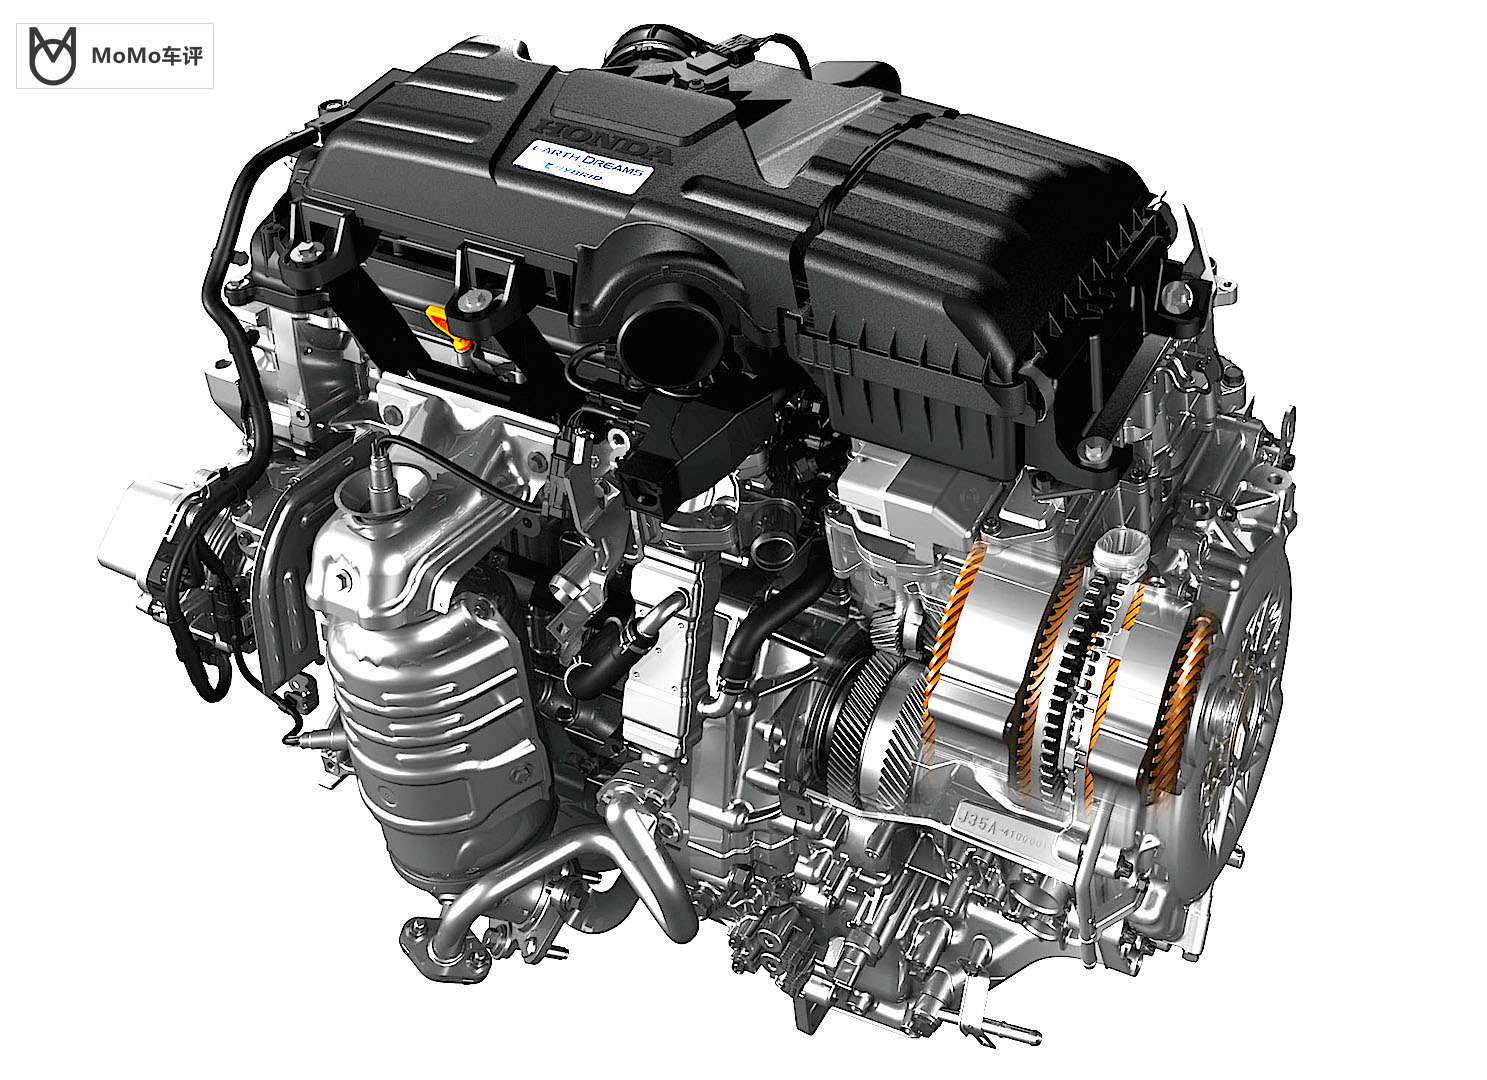 0l自然吸气阿特金森循环发动机 电动机组成,其中汽油机146马力,175nm